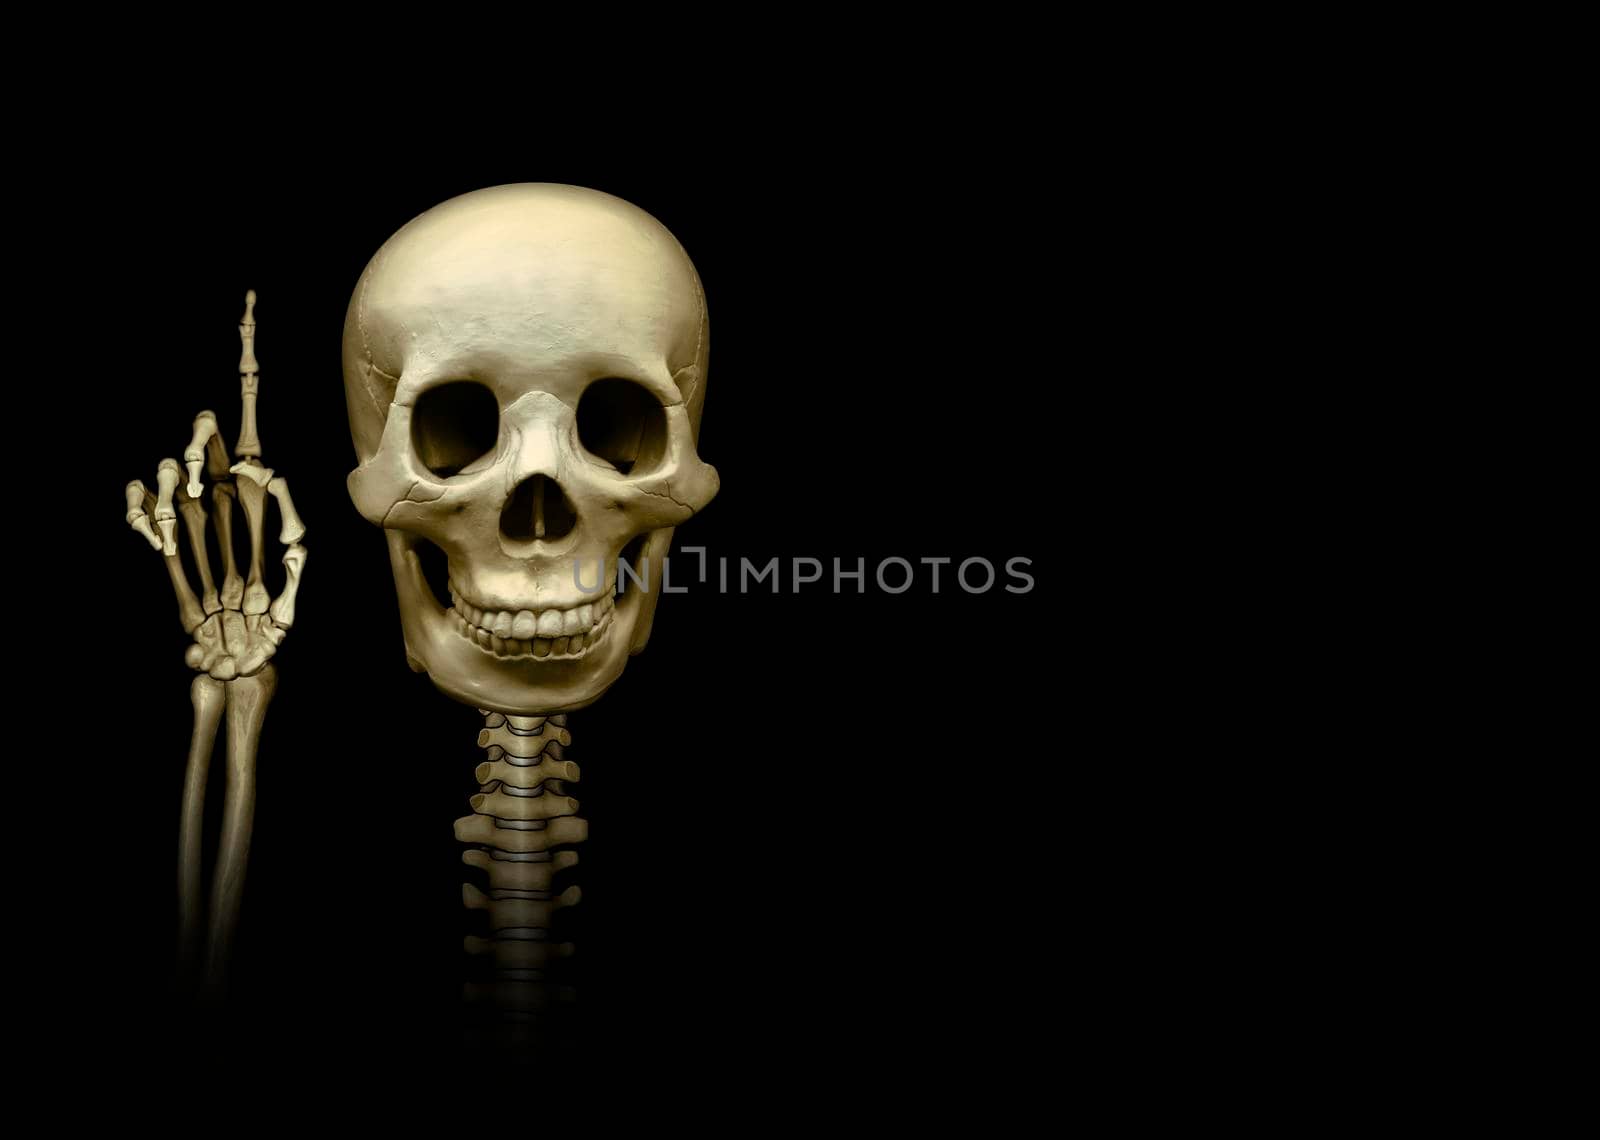 Human Skull with skeletal hand holding up index finger, signifying number one, against a black backround.